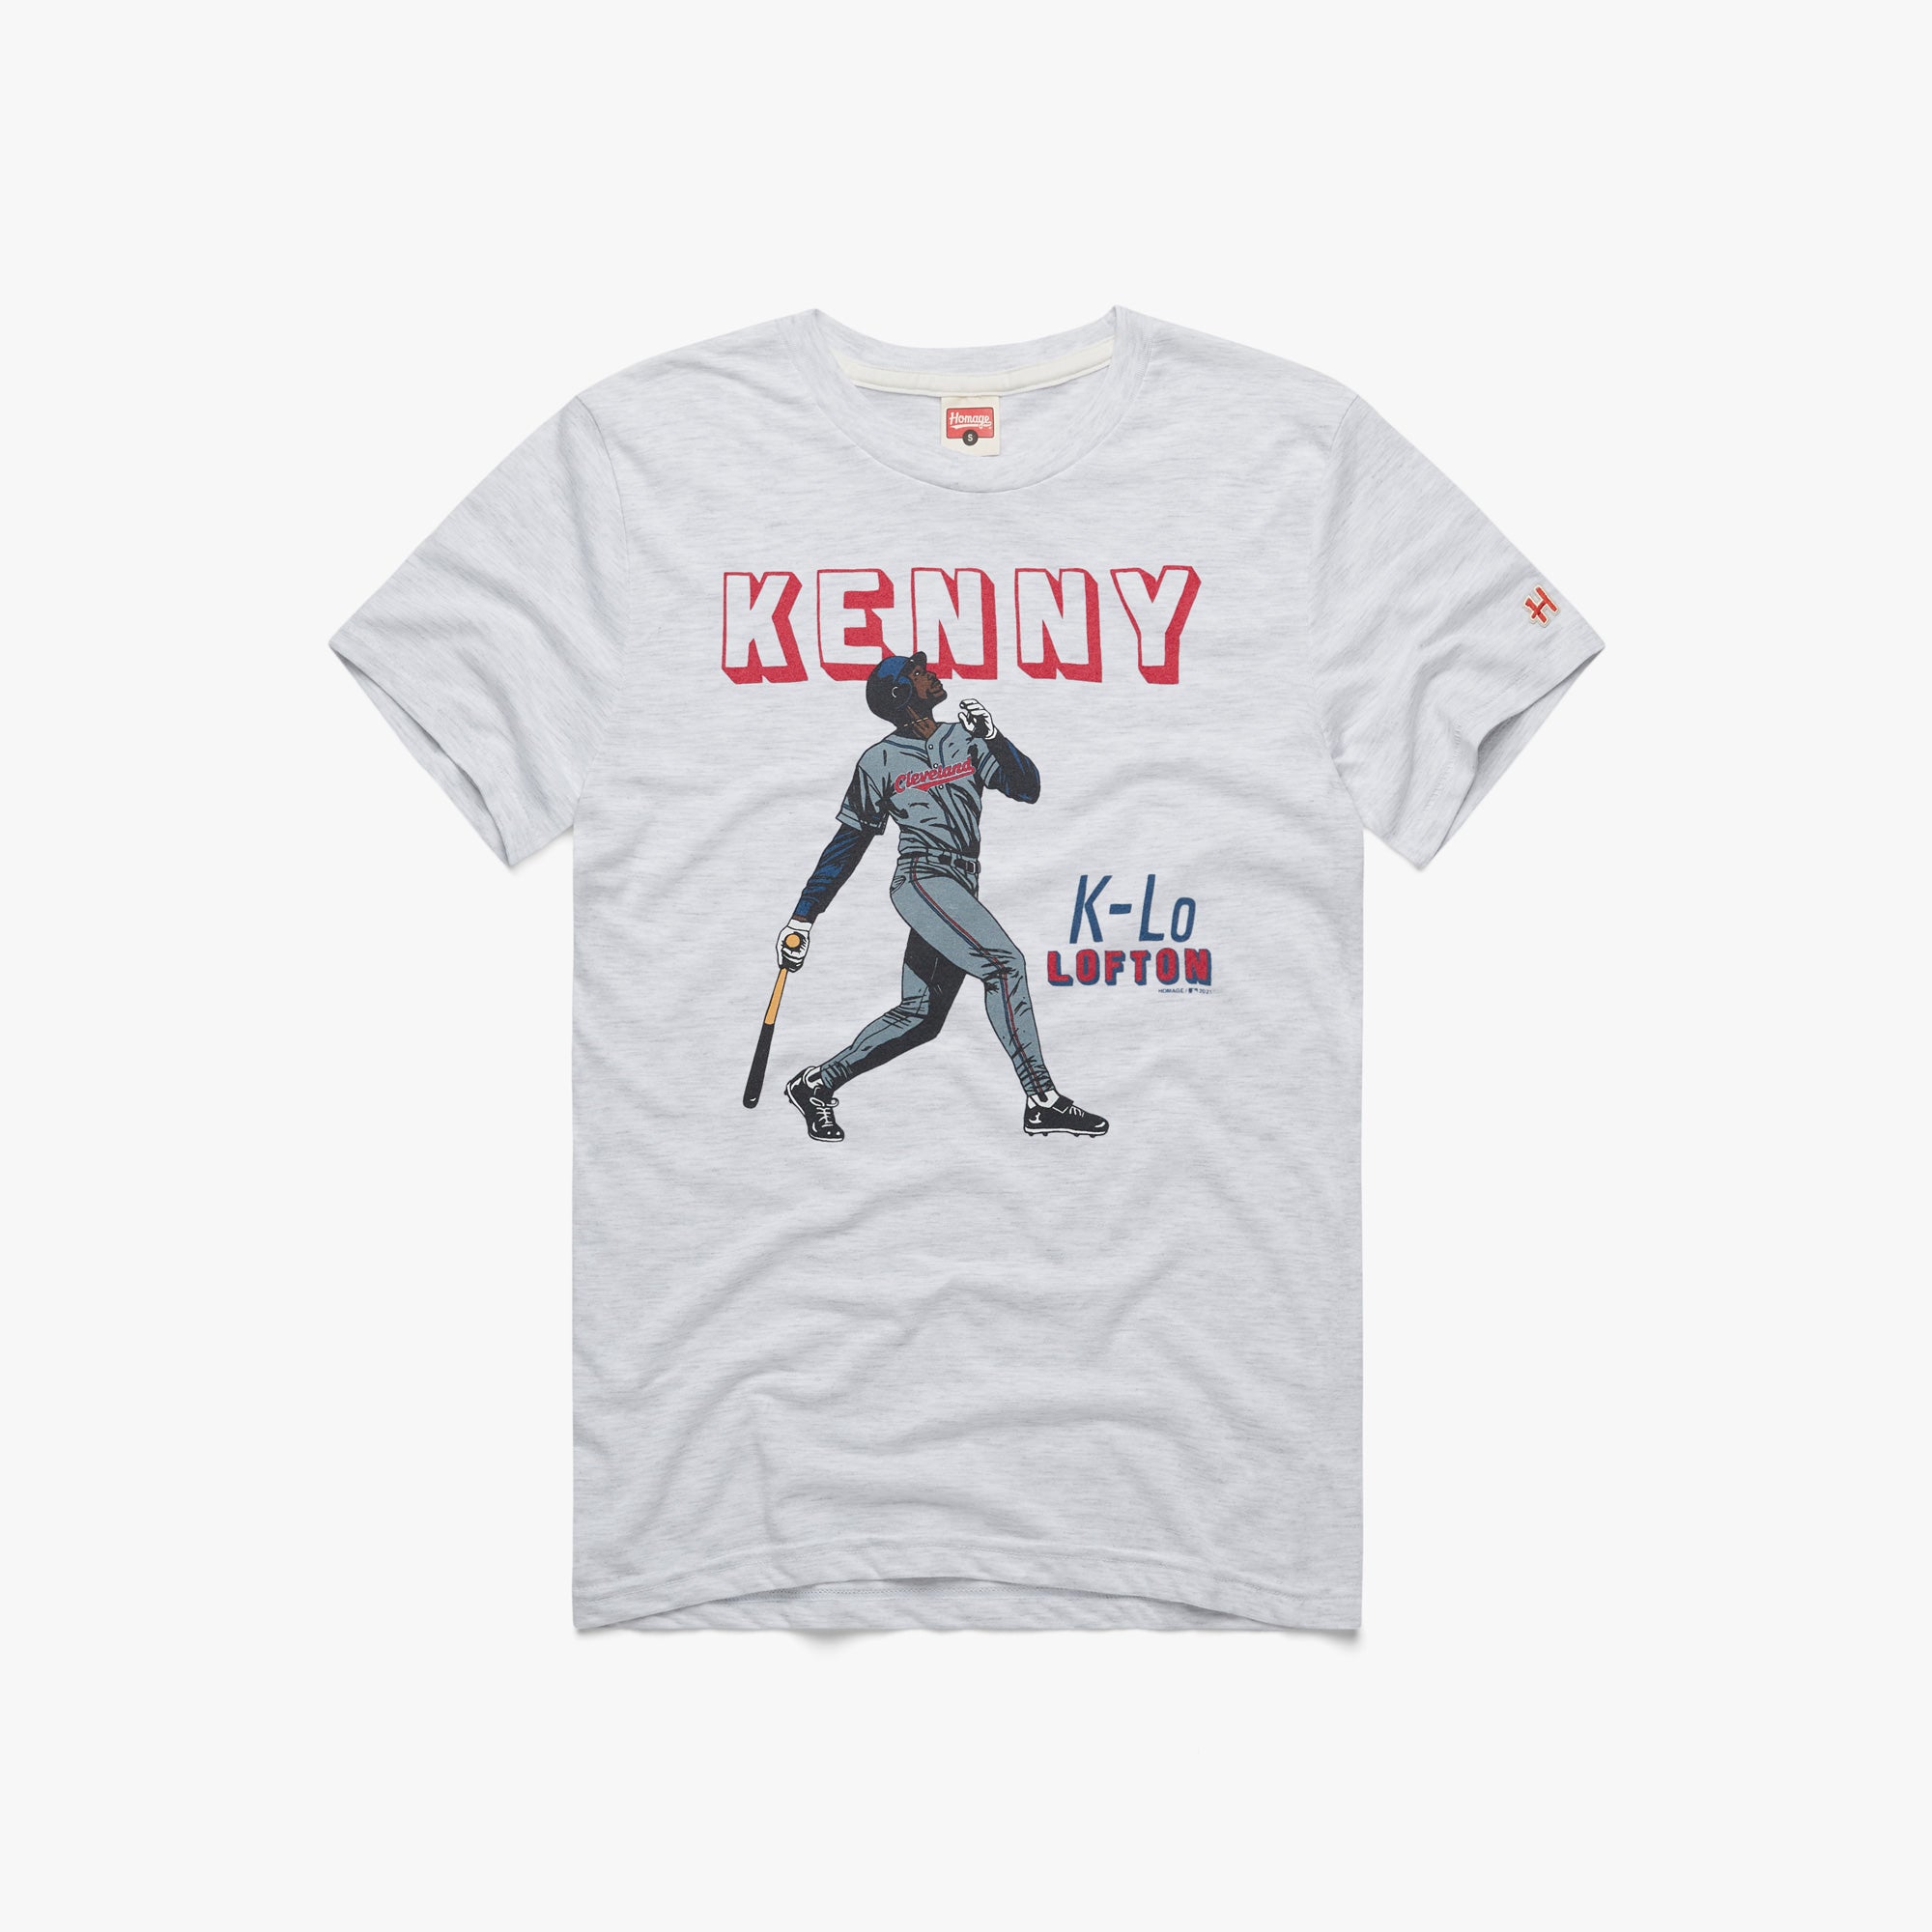 Kenny Lofton Cleveland Home Run